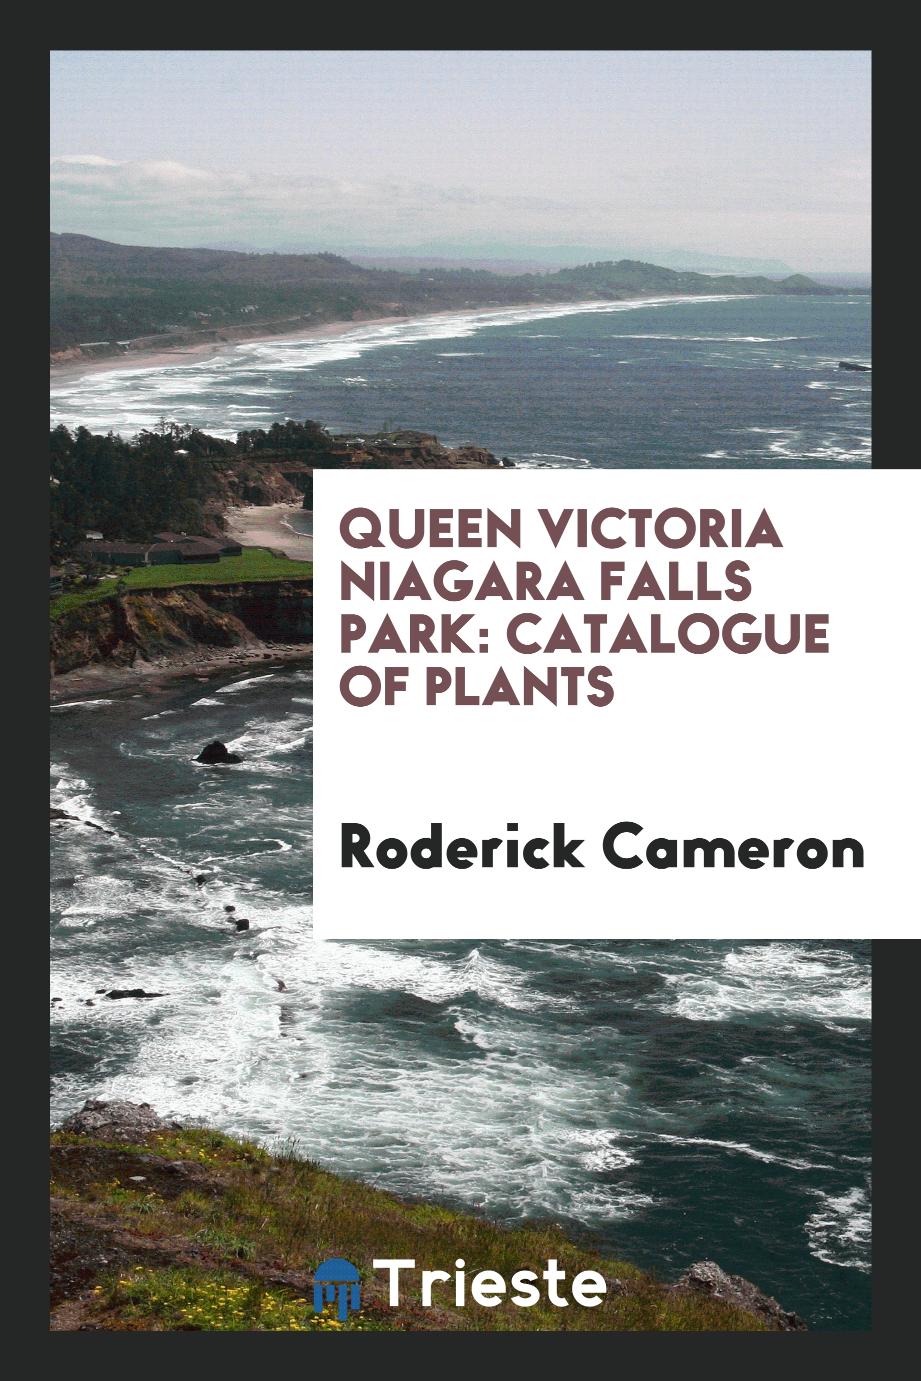 Roderick Cameron - Queen Victoria Niagara Falls park: catalogue of plants